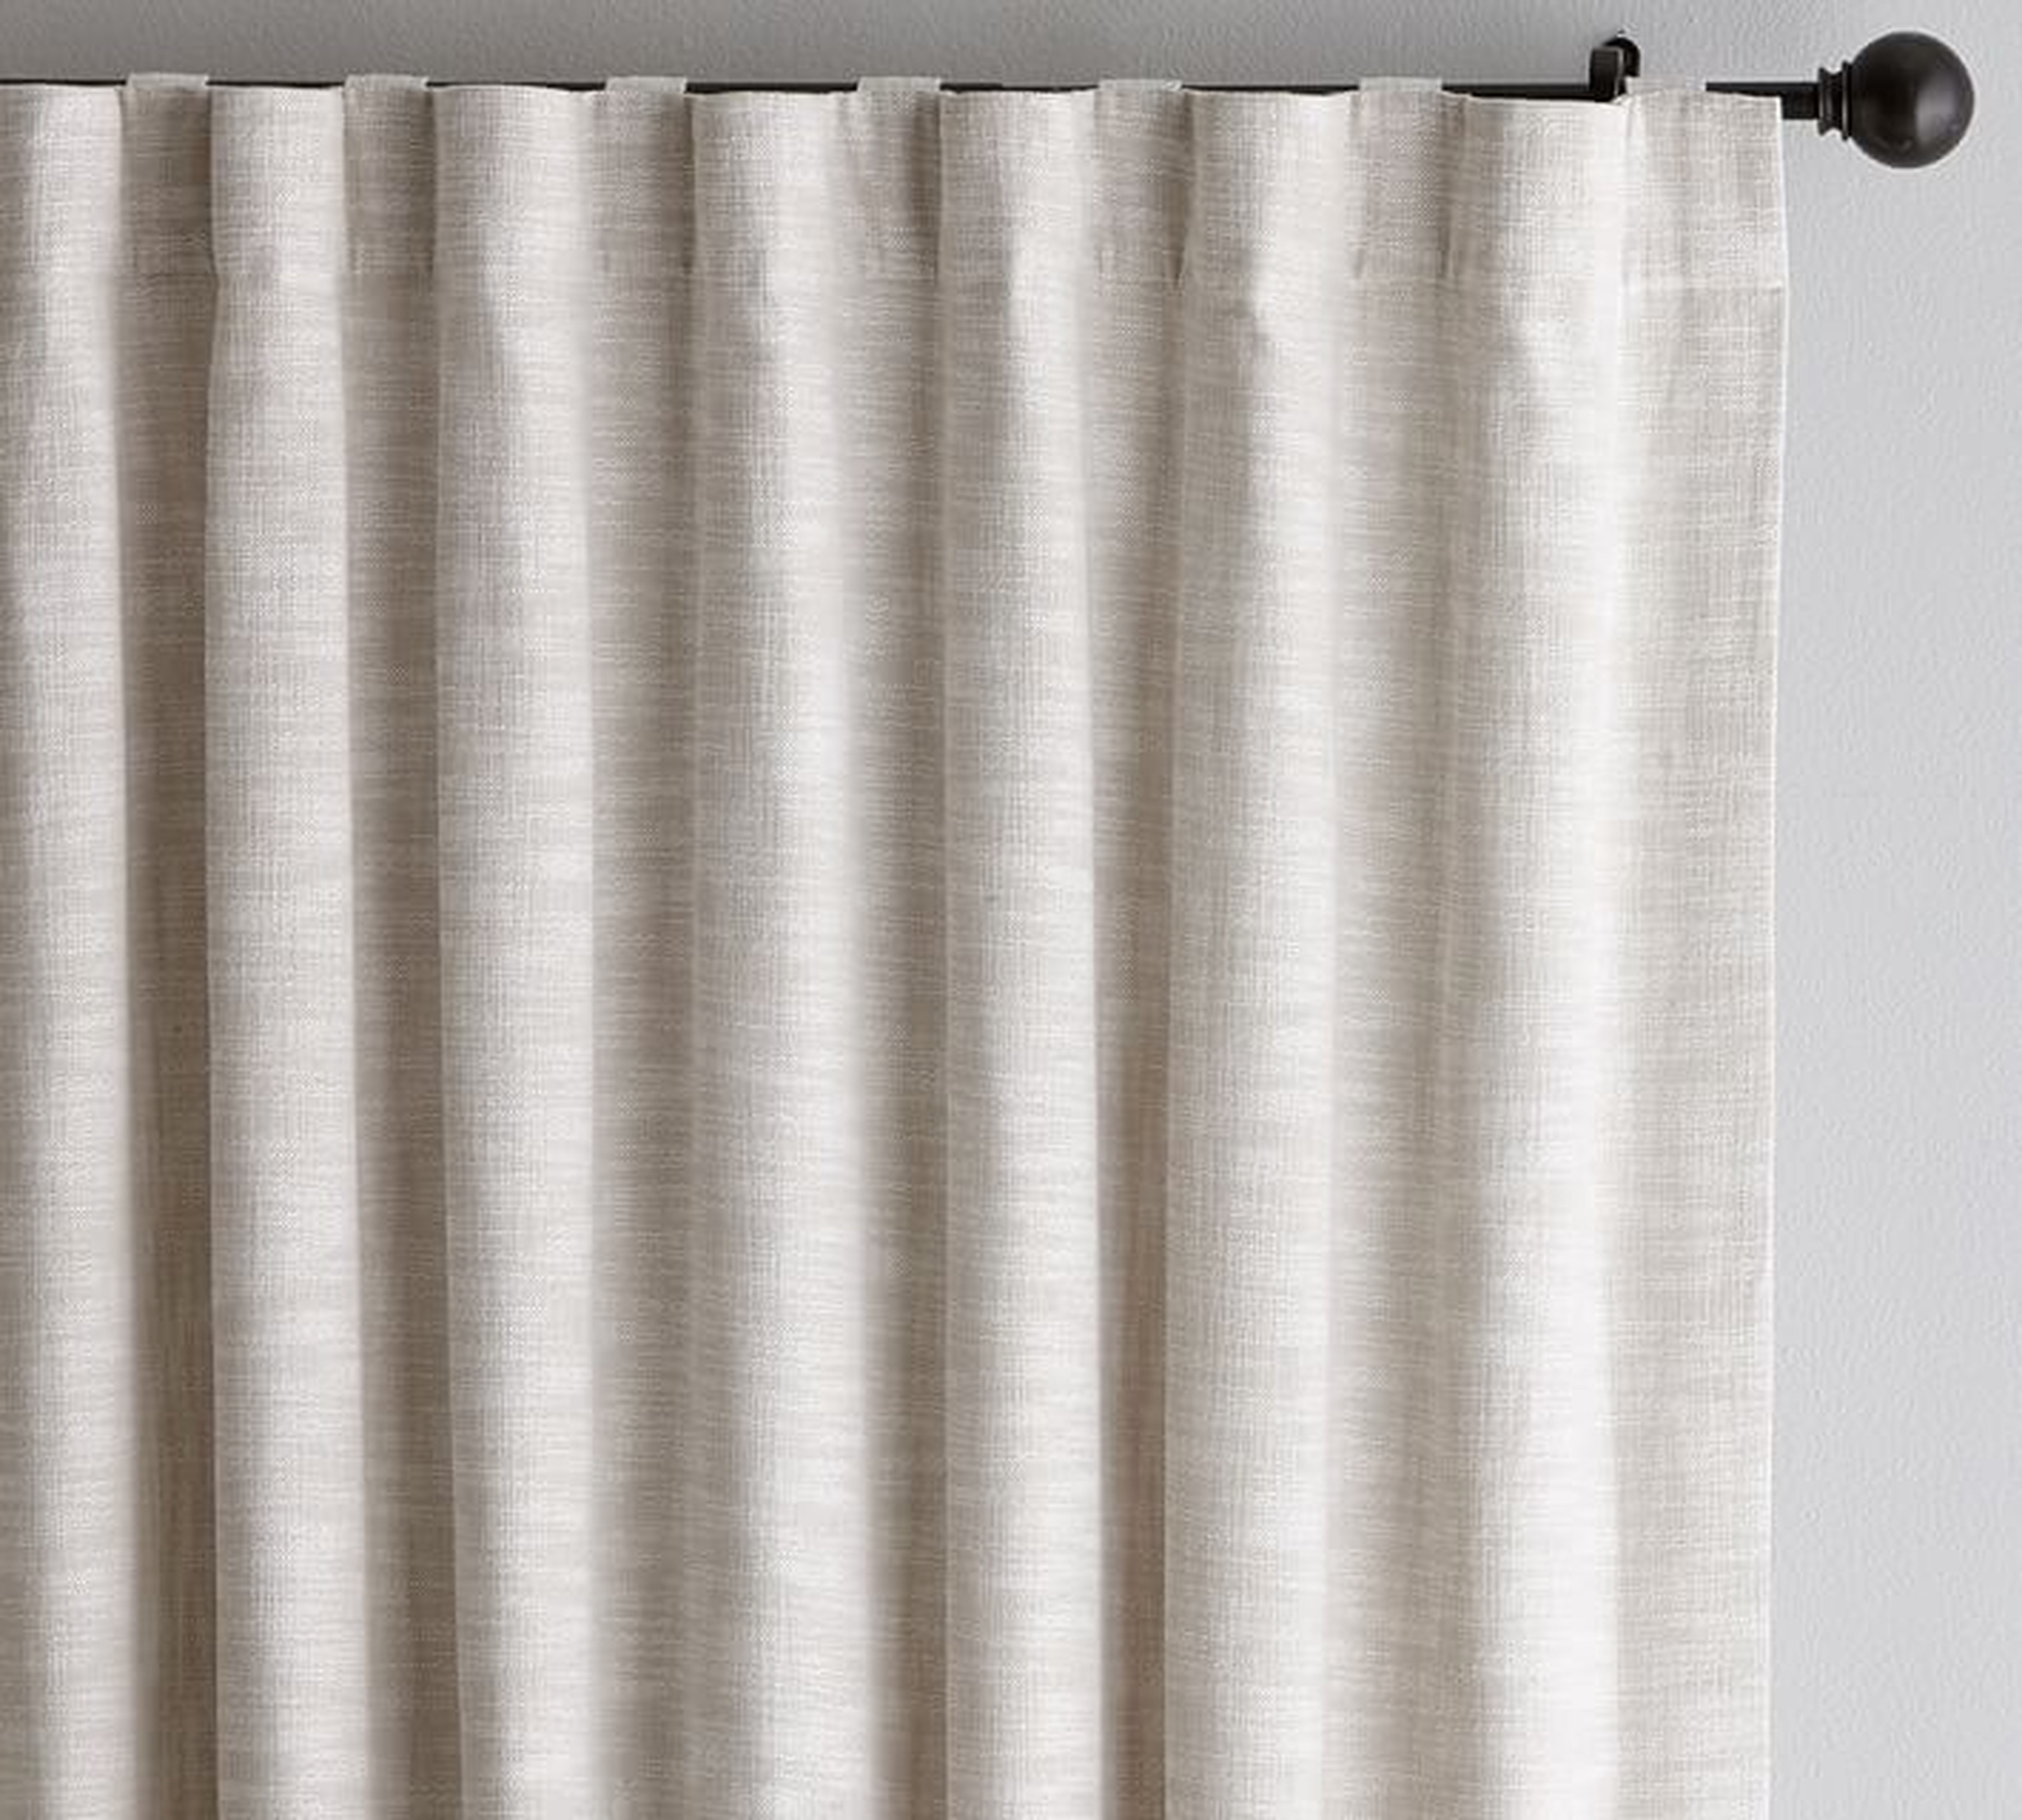 Seaton Textured Cotton Rod Pocket Curtain, 50 x 84", Neutral - Pottery Barn